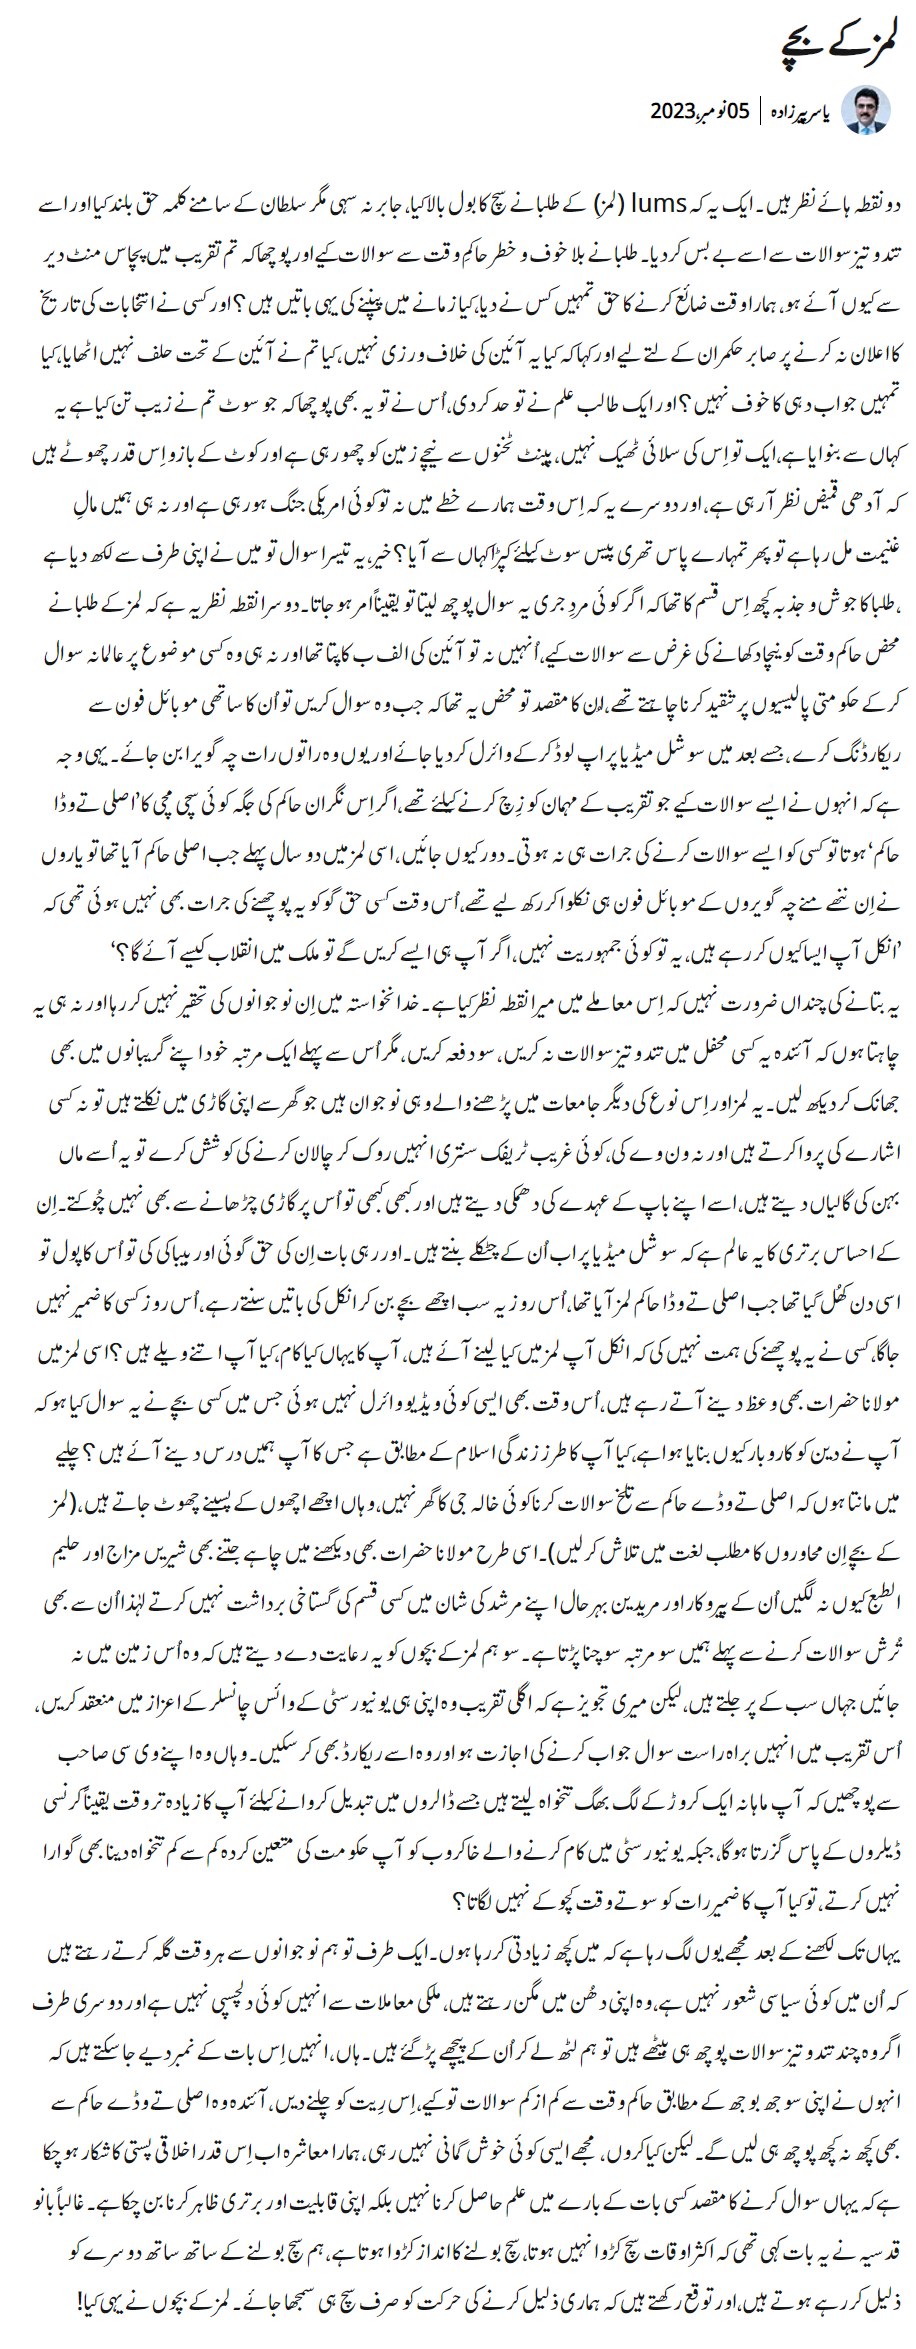 Yasir Pirzada urdu column about LUMS students Anwar ul Haq Kakar Visit to university